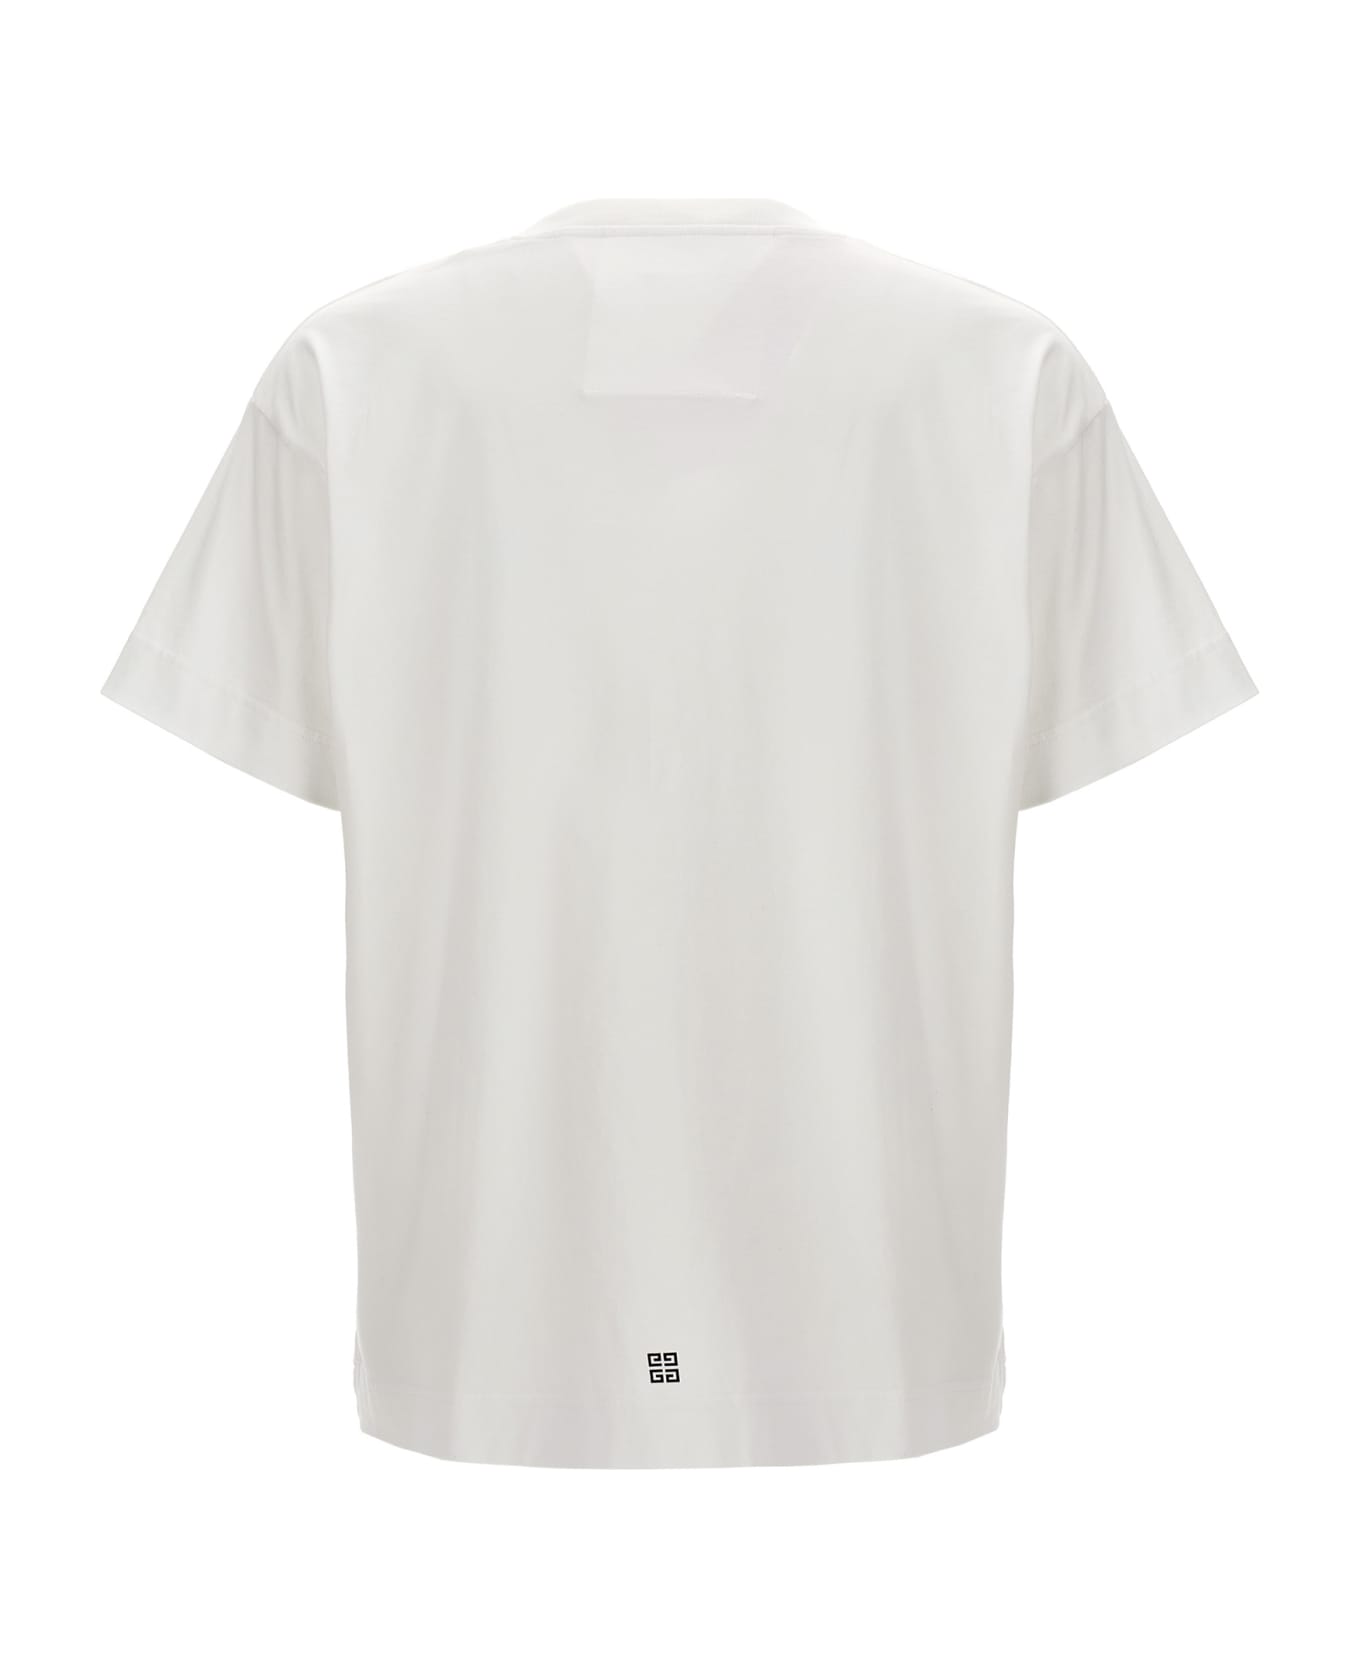 Givenchy Printed T-shirt - White シャツ